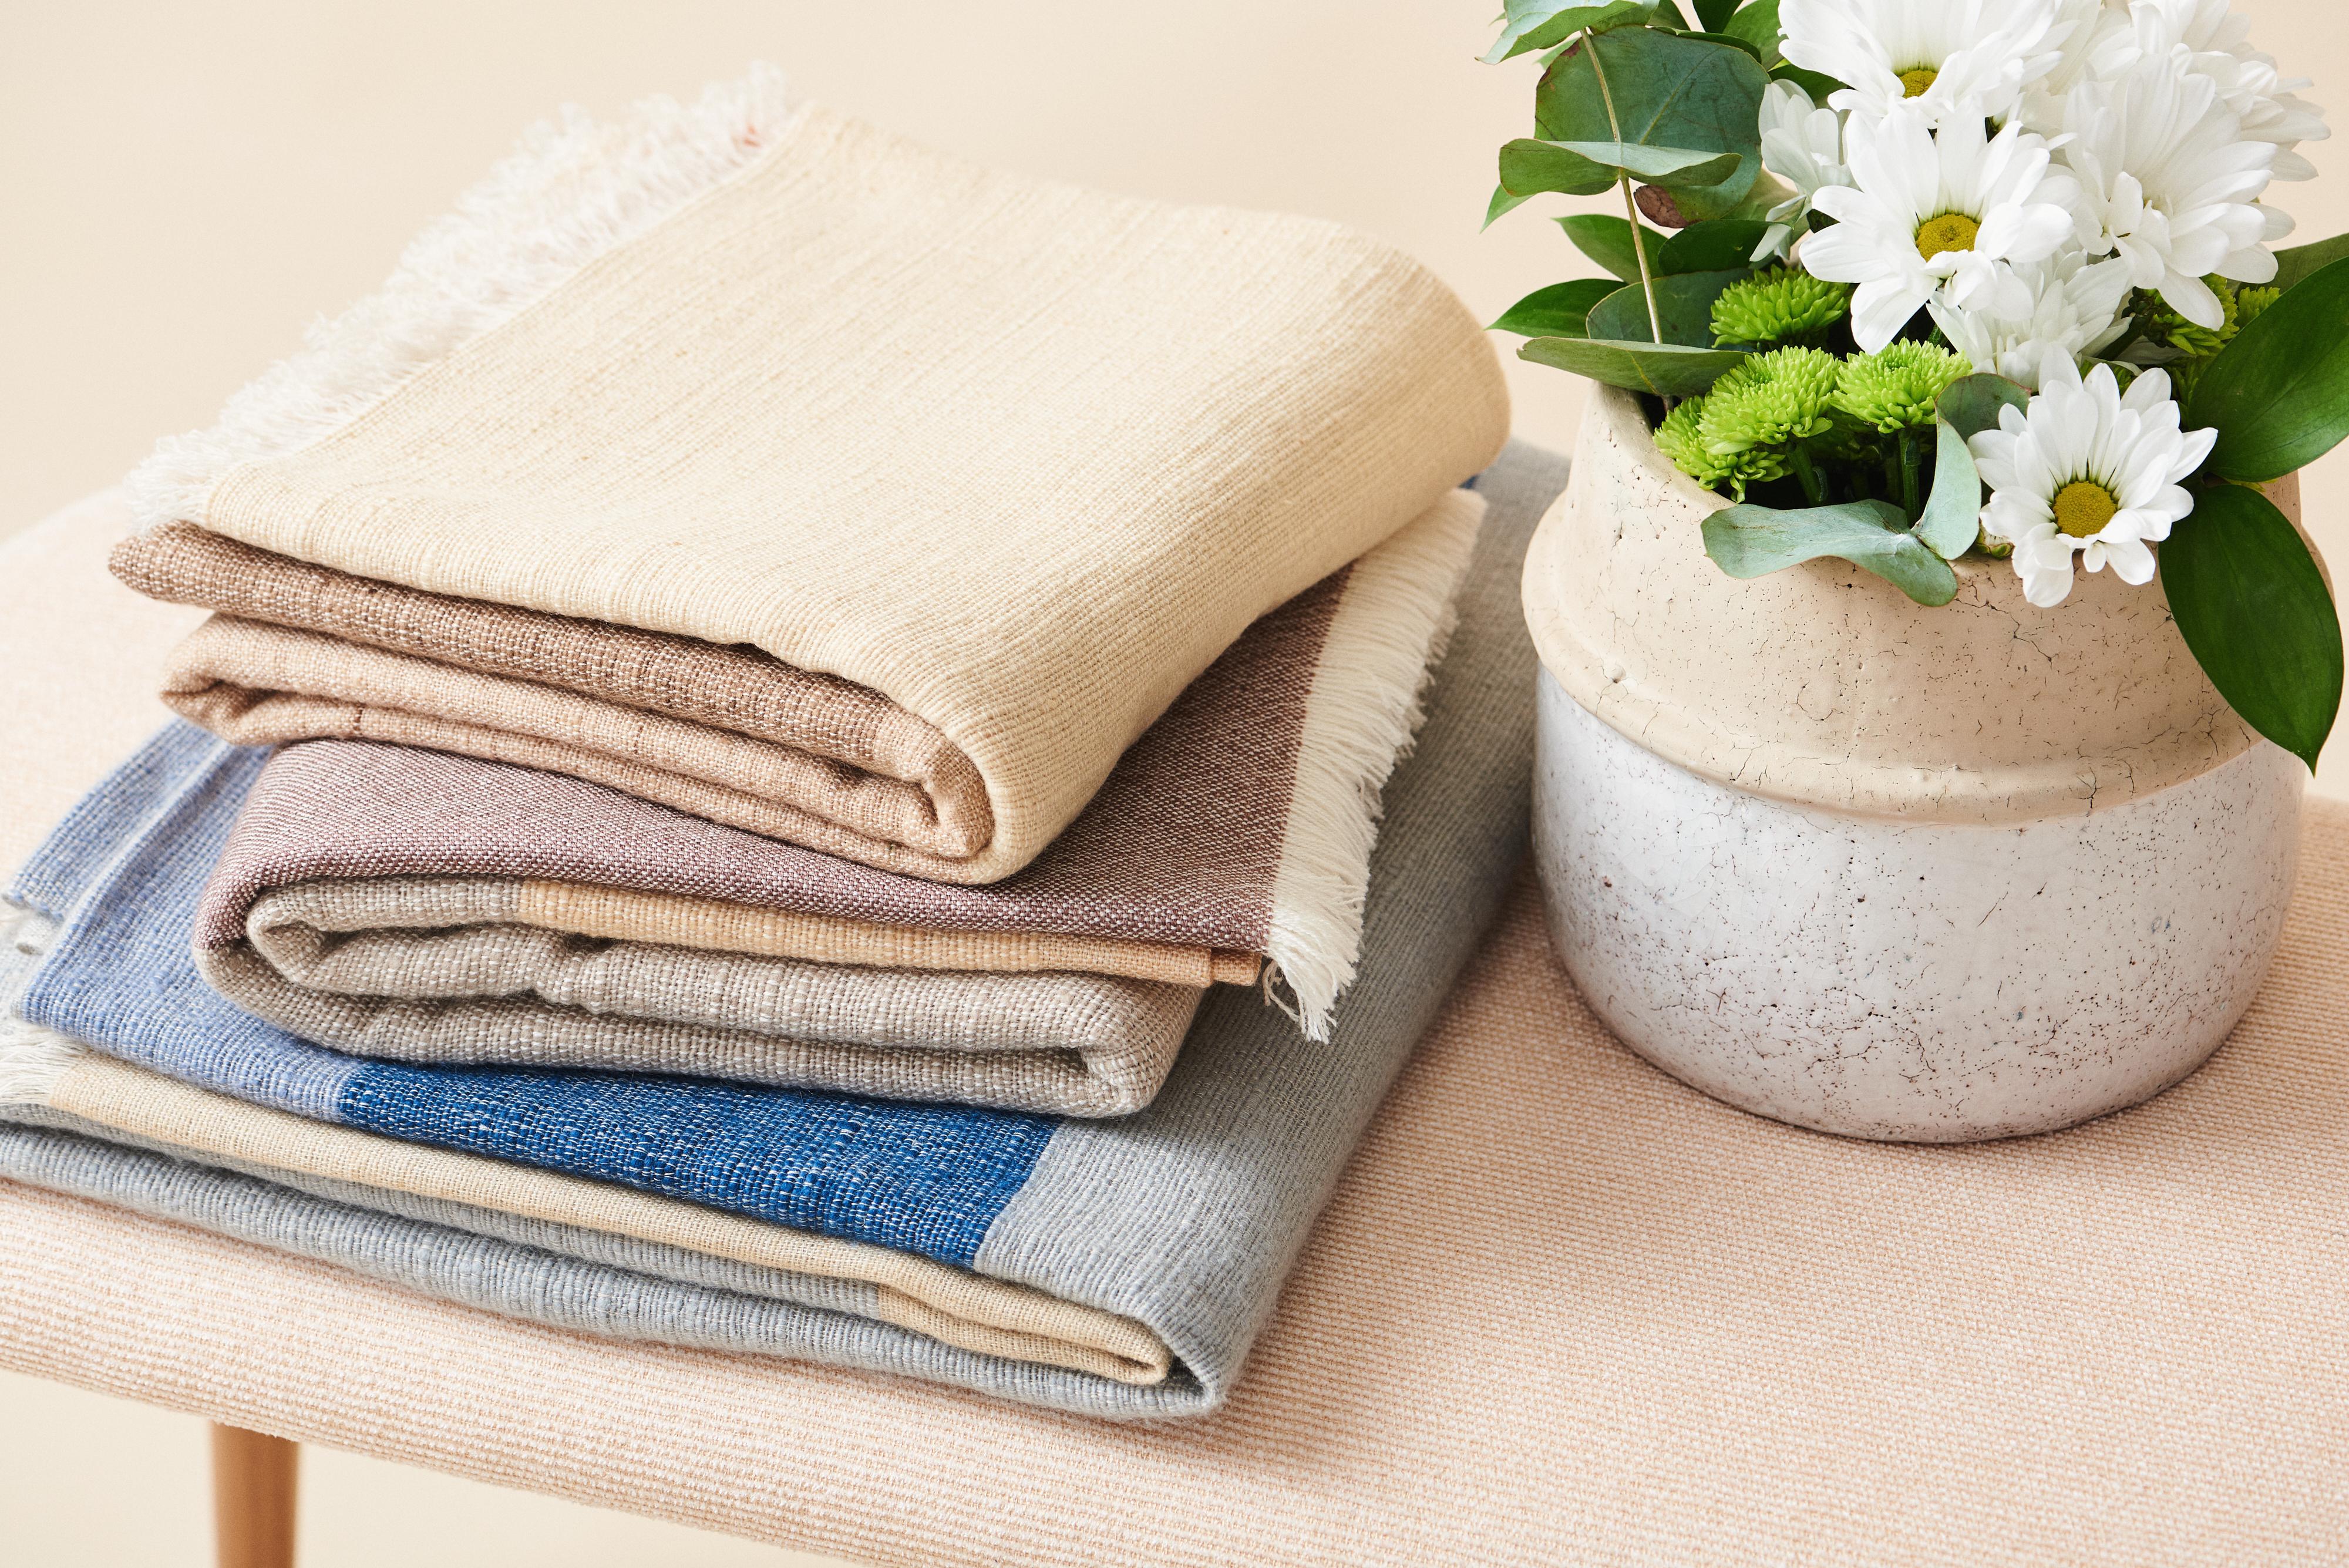 Ceru Handloom Merino Throw / Blanket in Neutral Shades of Cream & Serene Blue For Sale 9